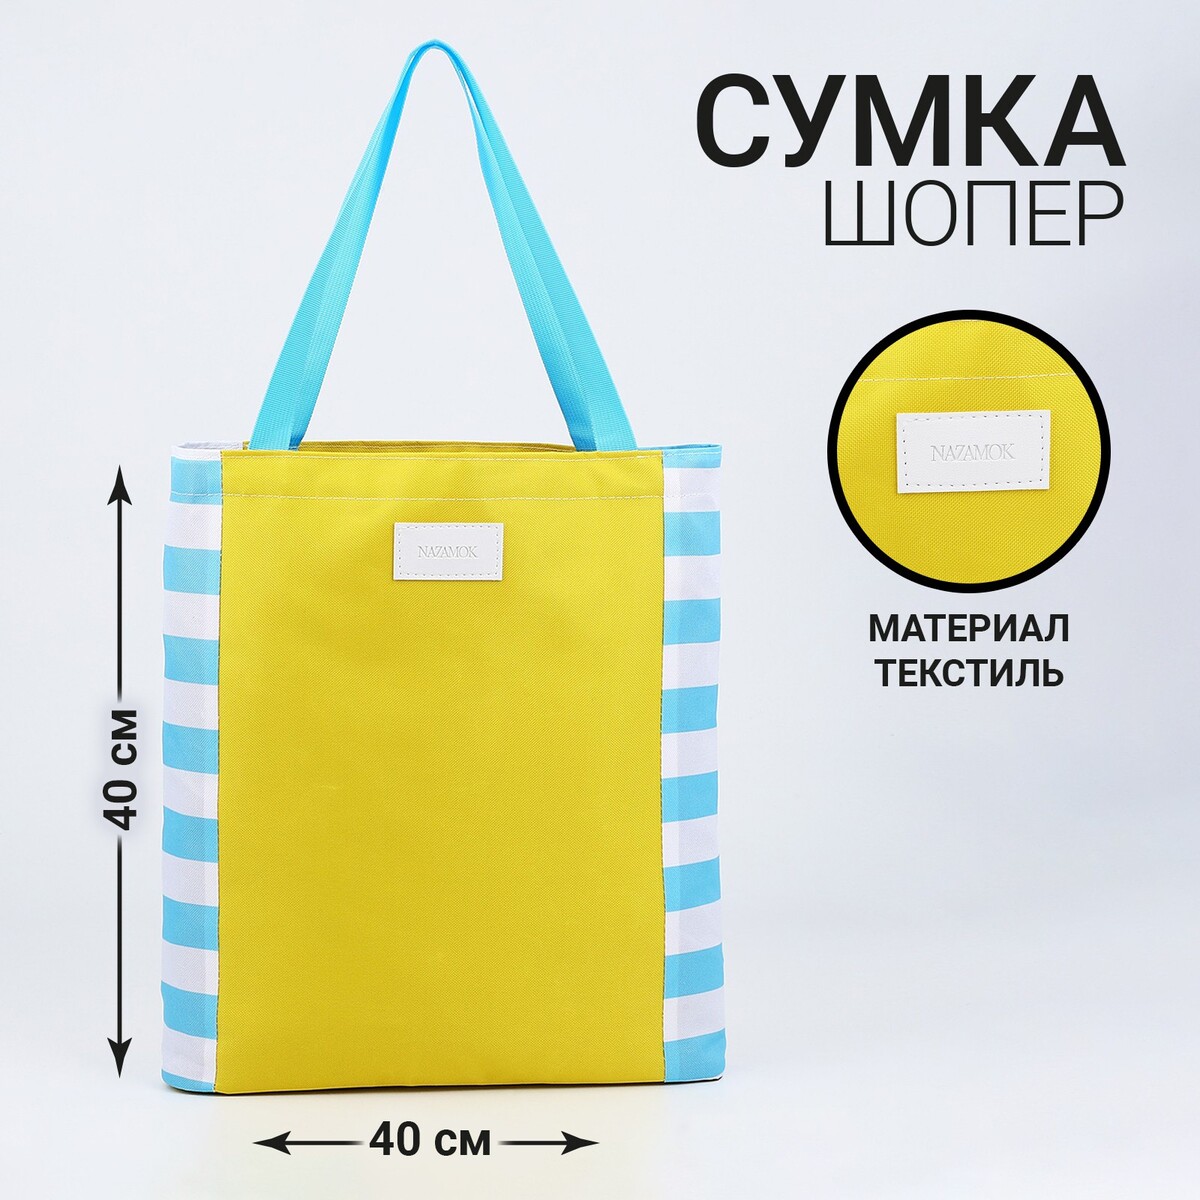 Сумка женская пляжная nazamok, 40х40см, желтый цвет сумка пляжная без застежки красный